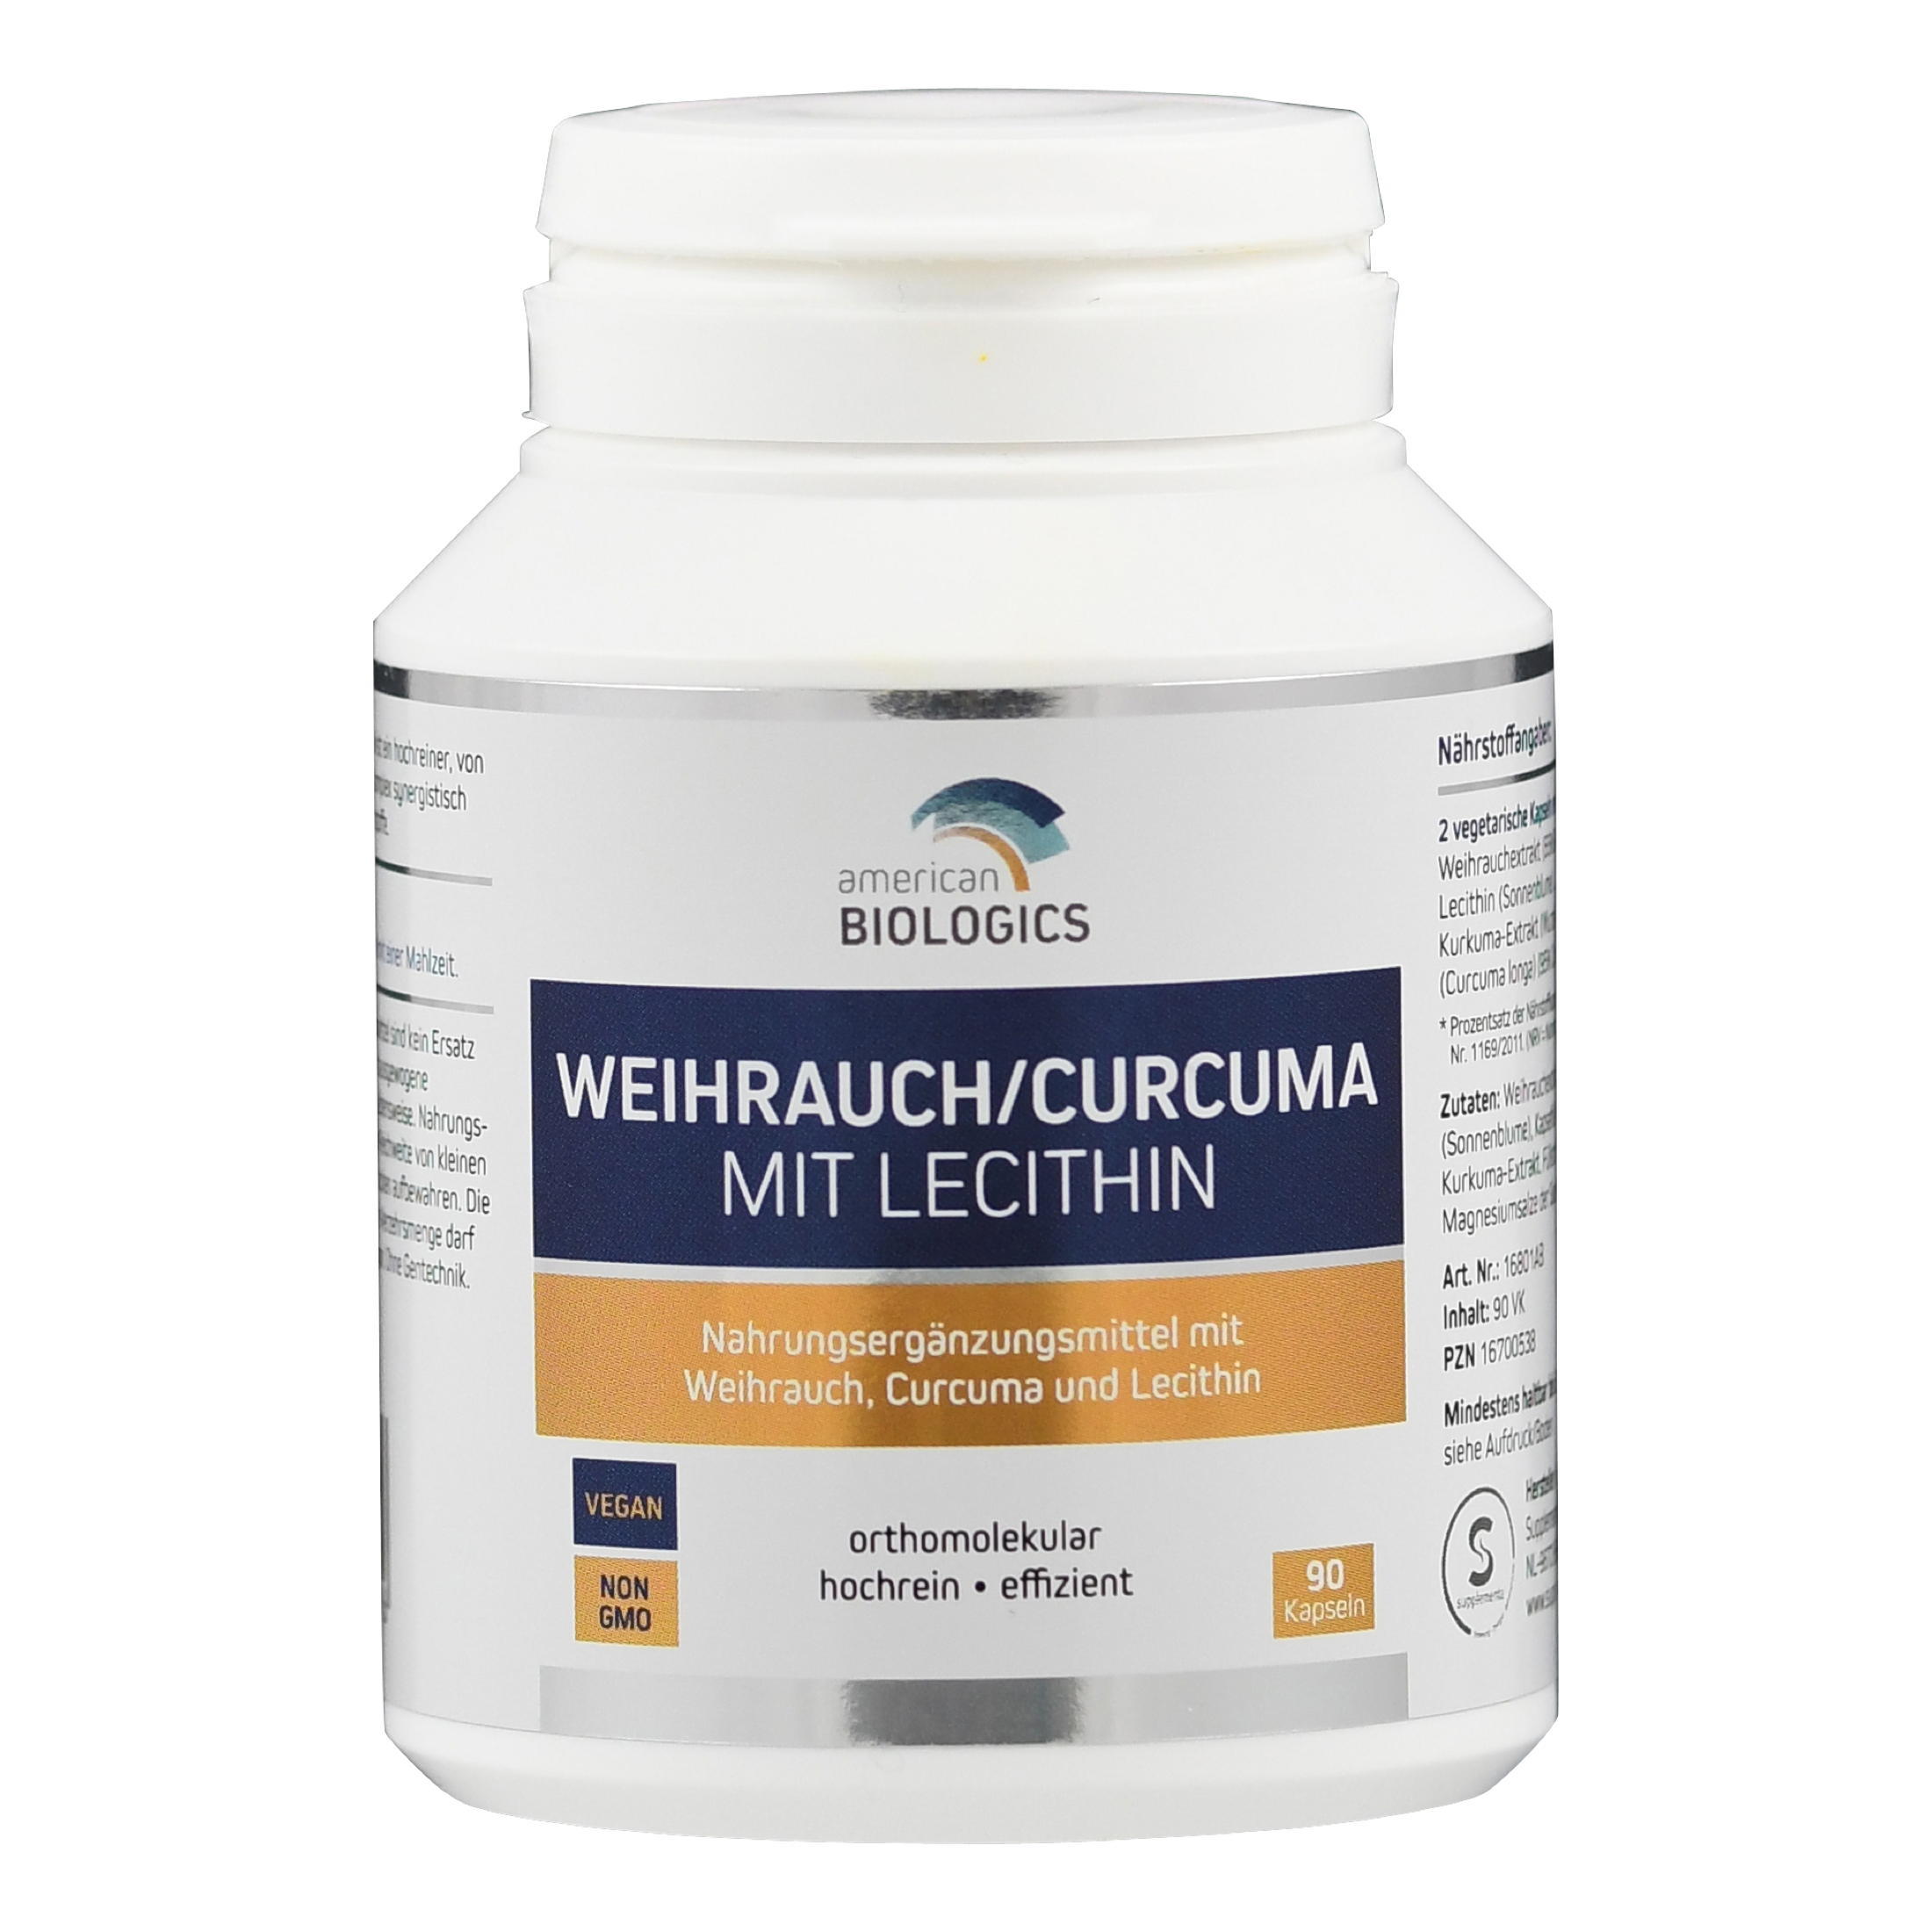 Weihrauch/Curcuma mit Lecithin